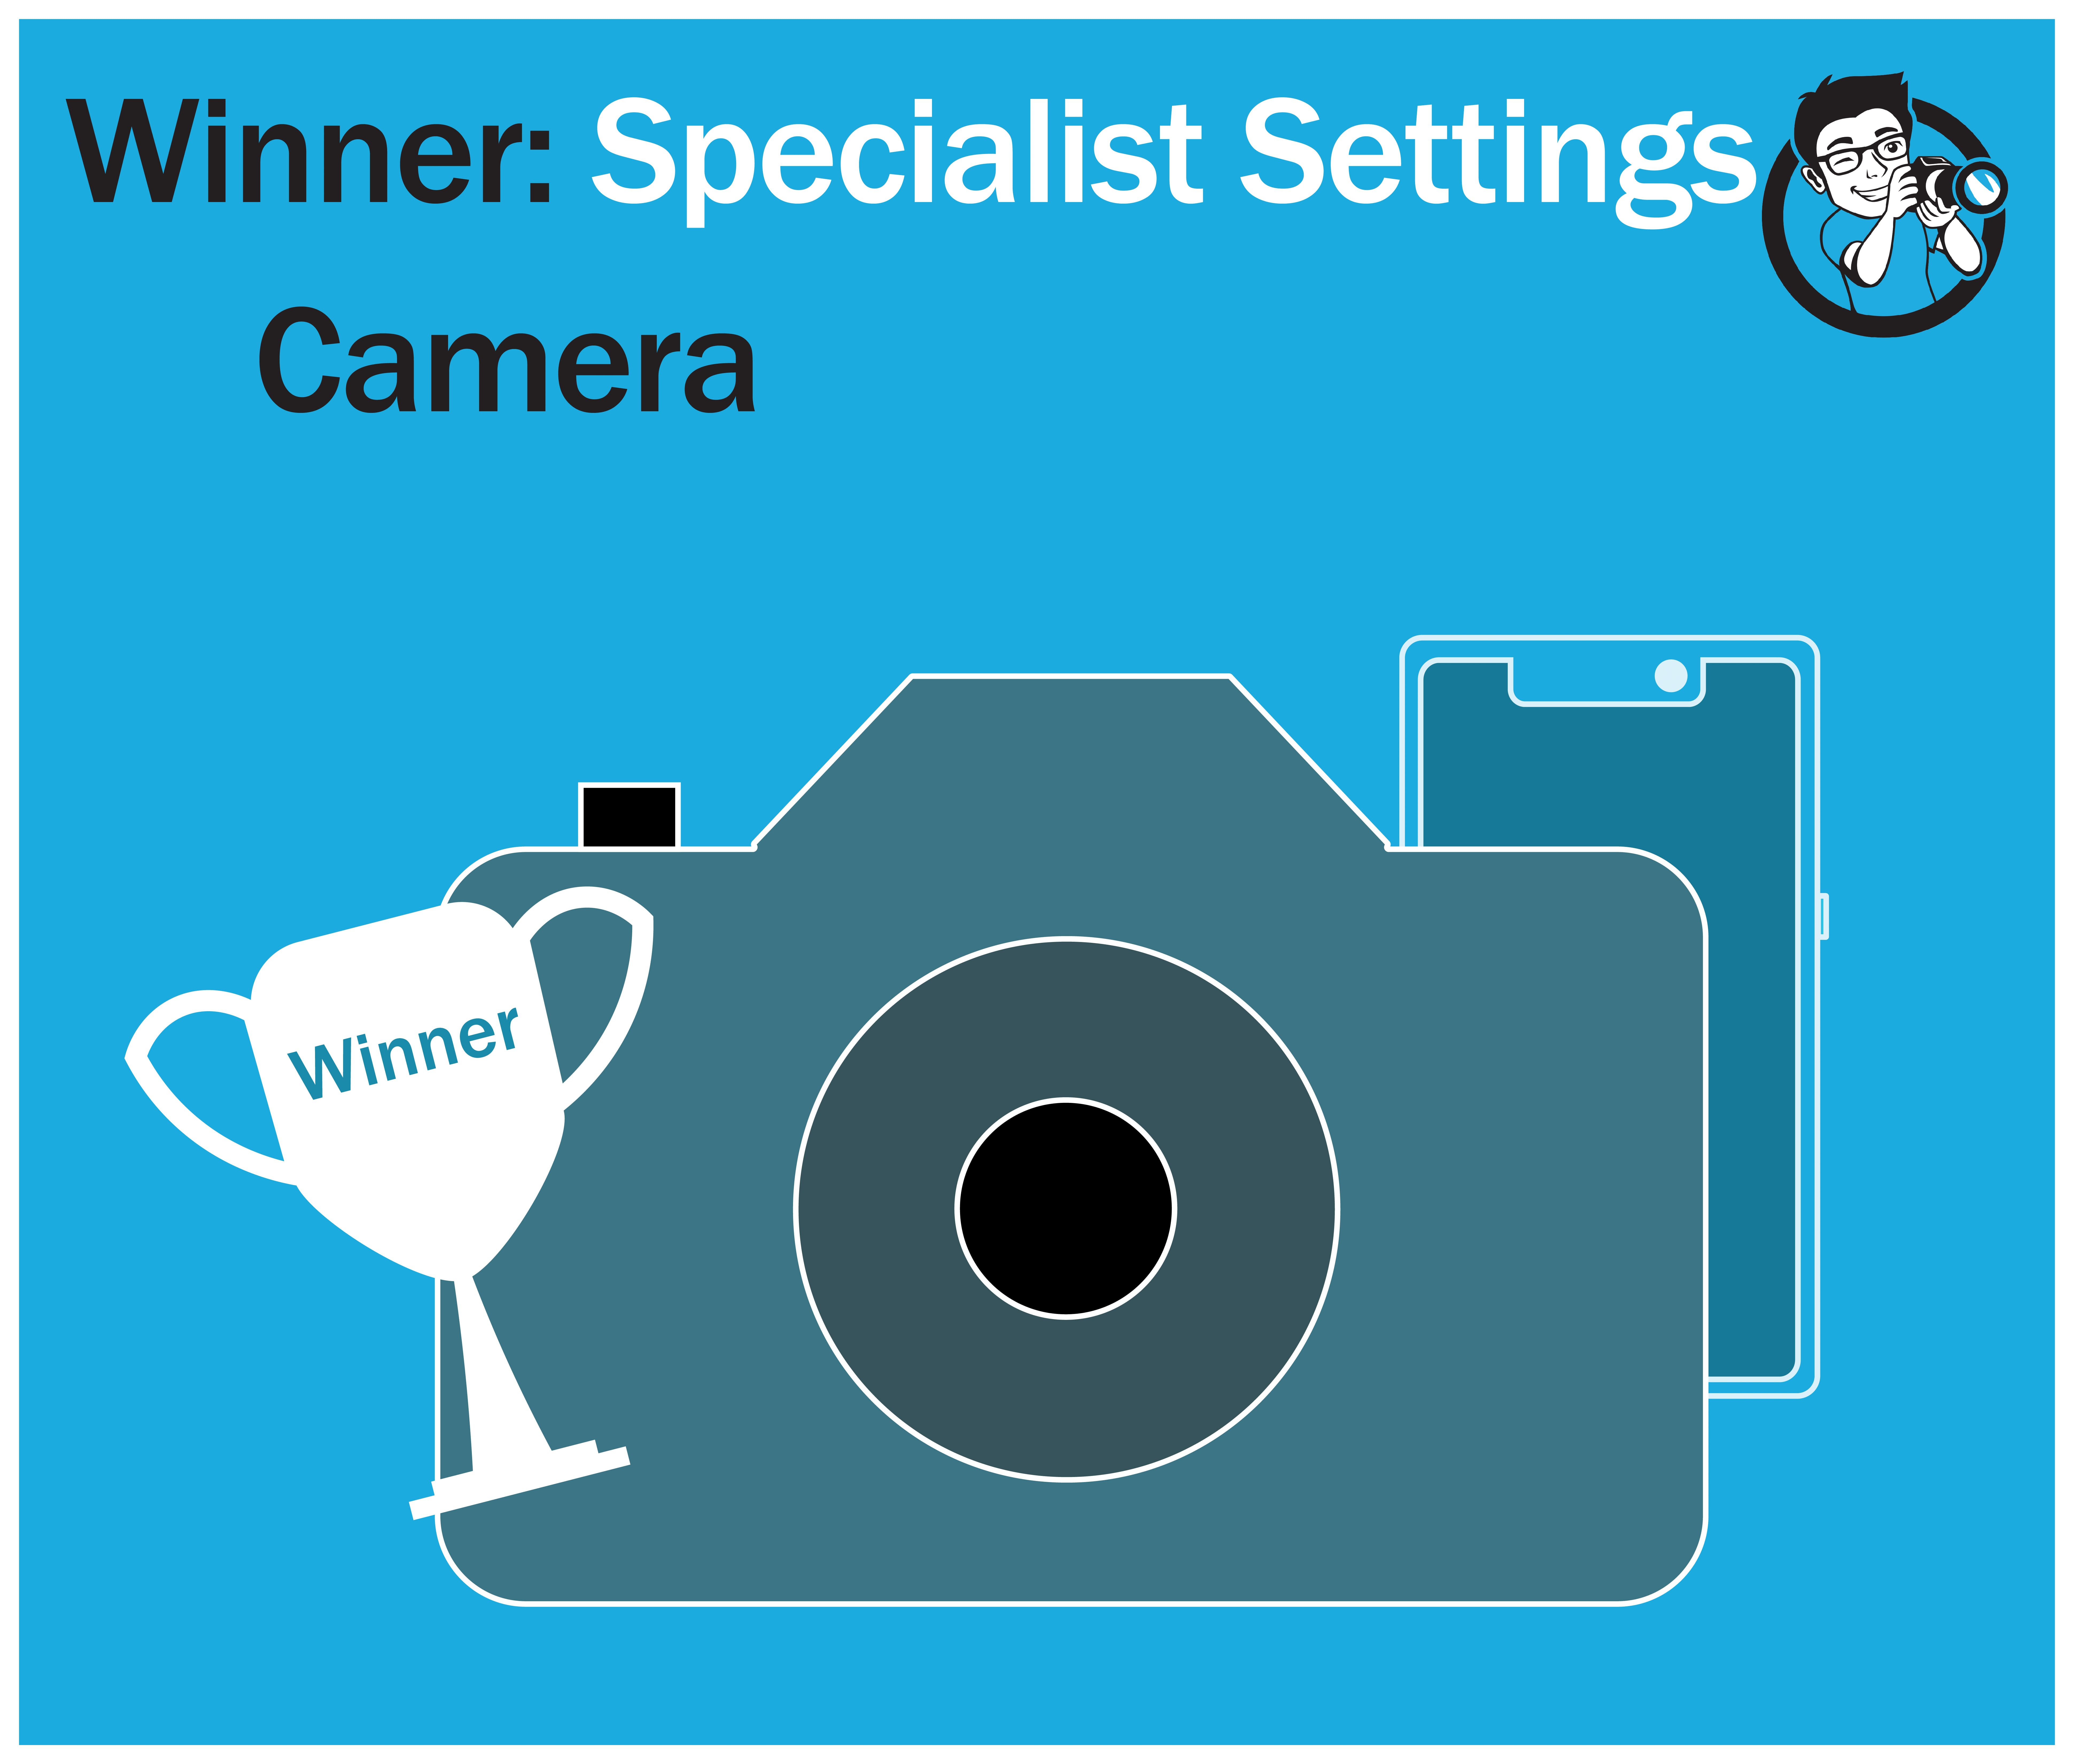 Winner specialist settings smartphone VS camera